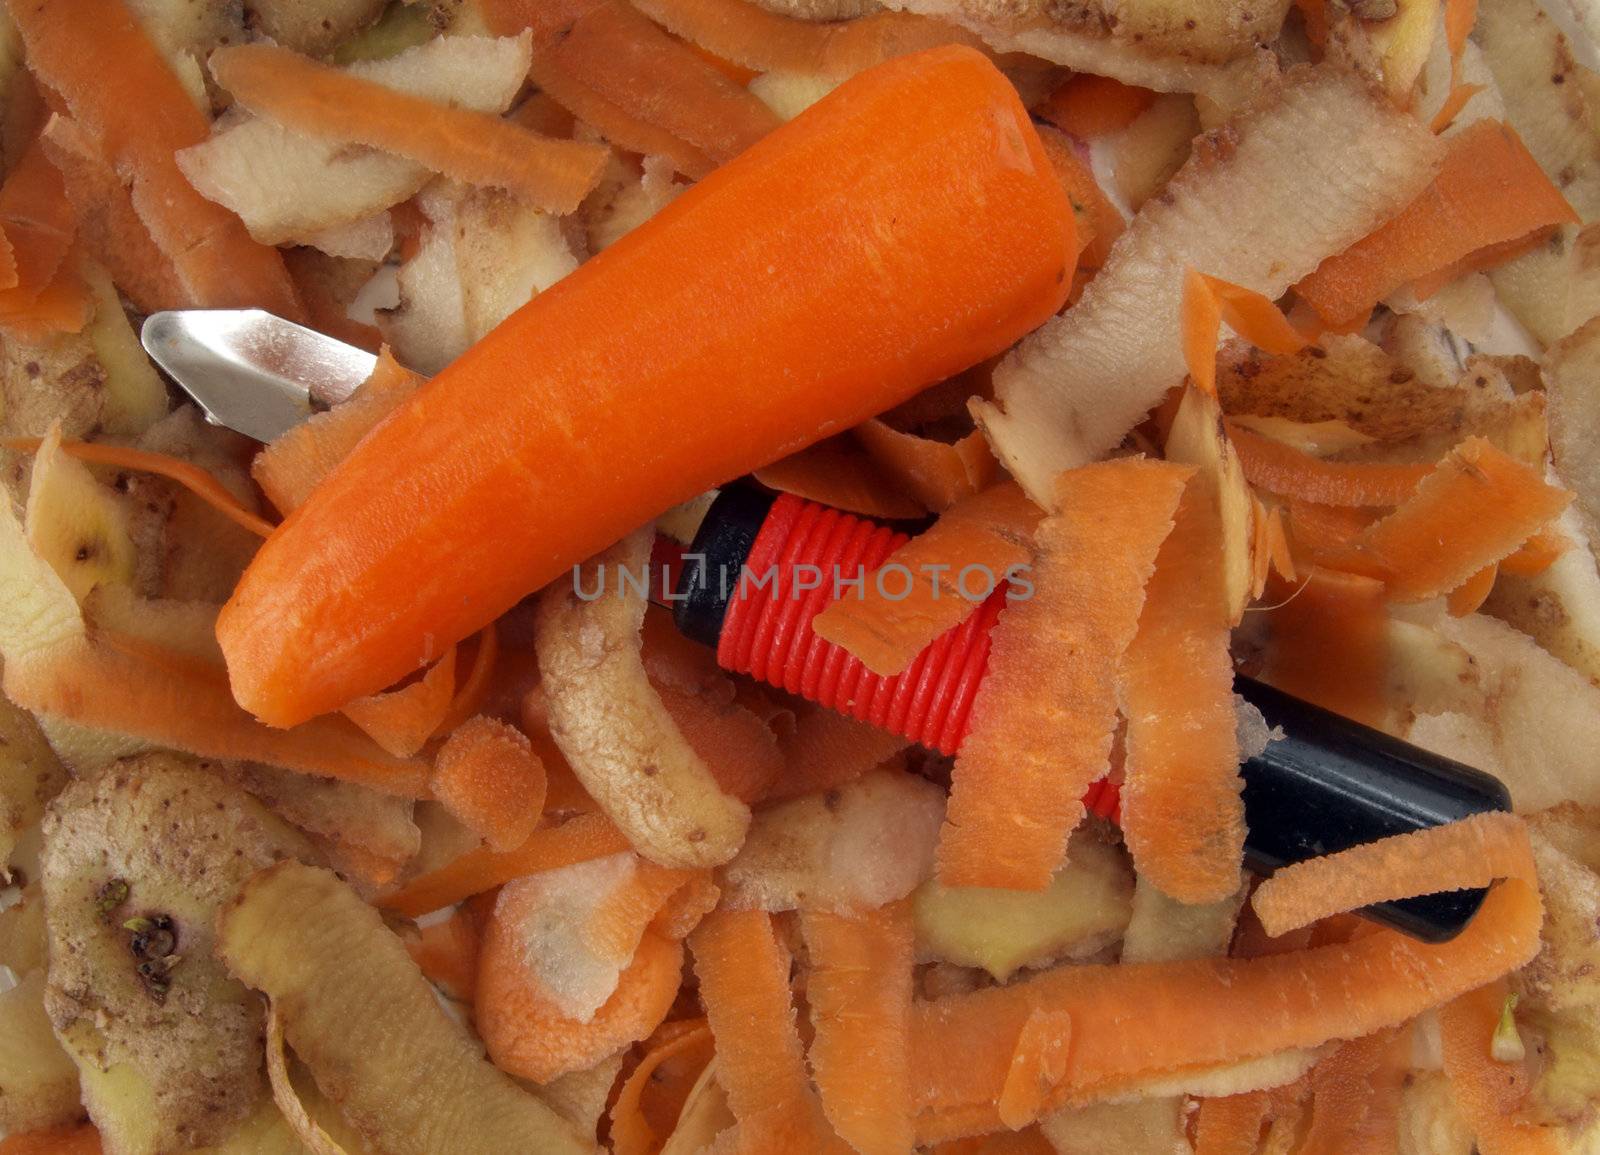 Vegetable scraper with carrot and potato peelings .